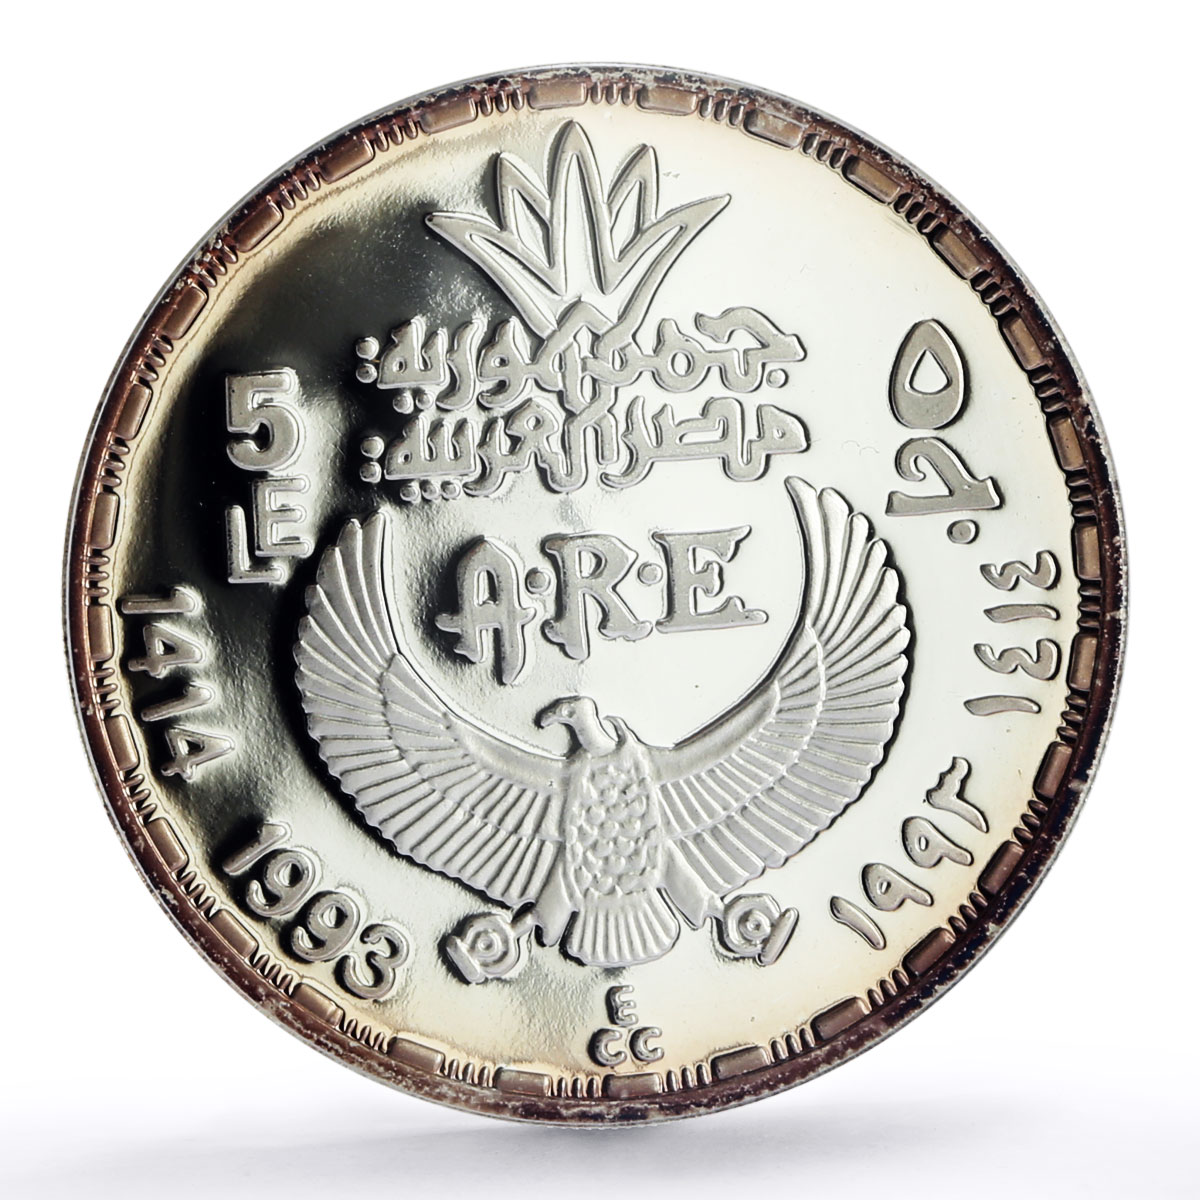 Egypt 5 pounds Treasures King Namur Narmer Palette PR69 PCGS silver coin 1993